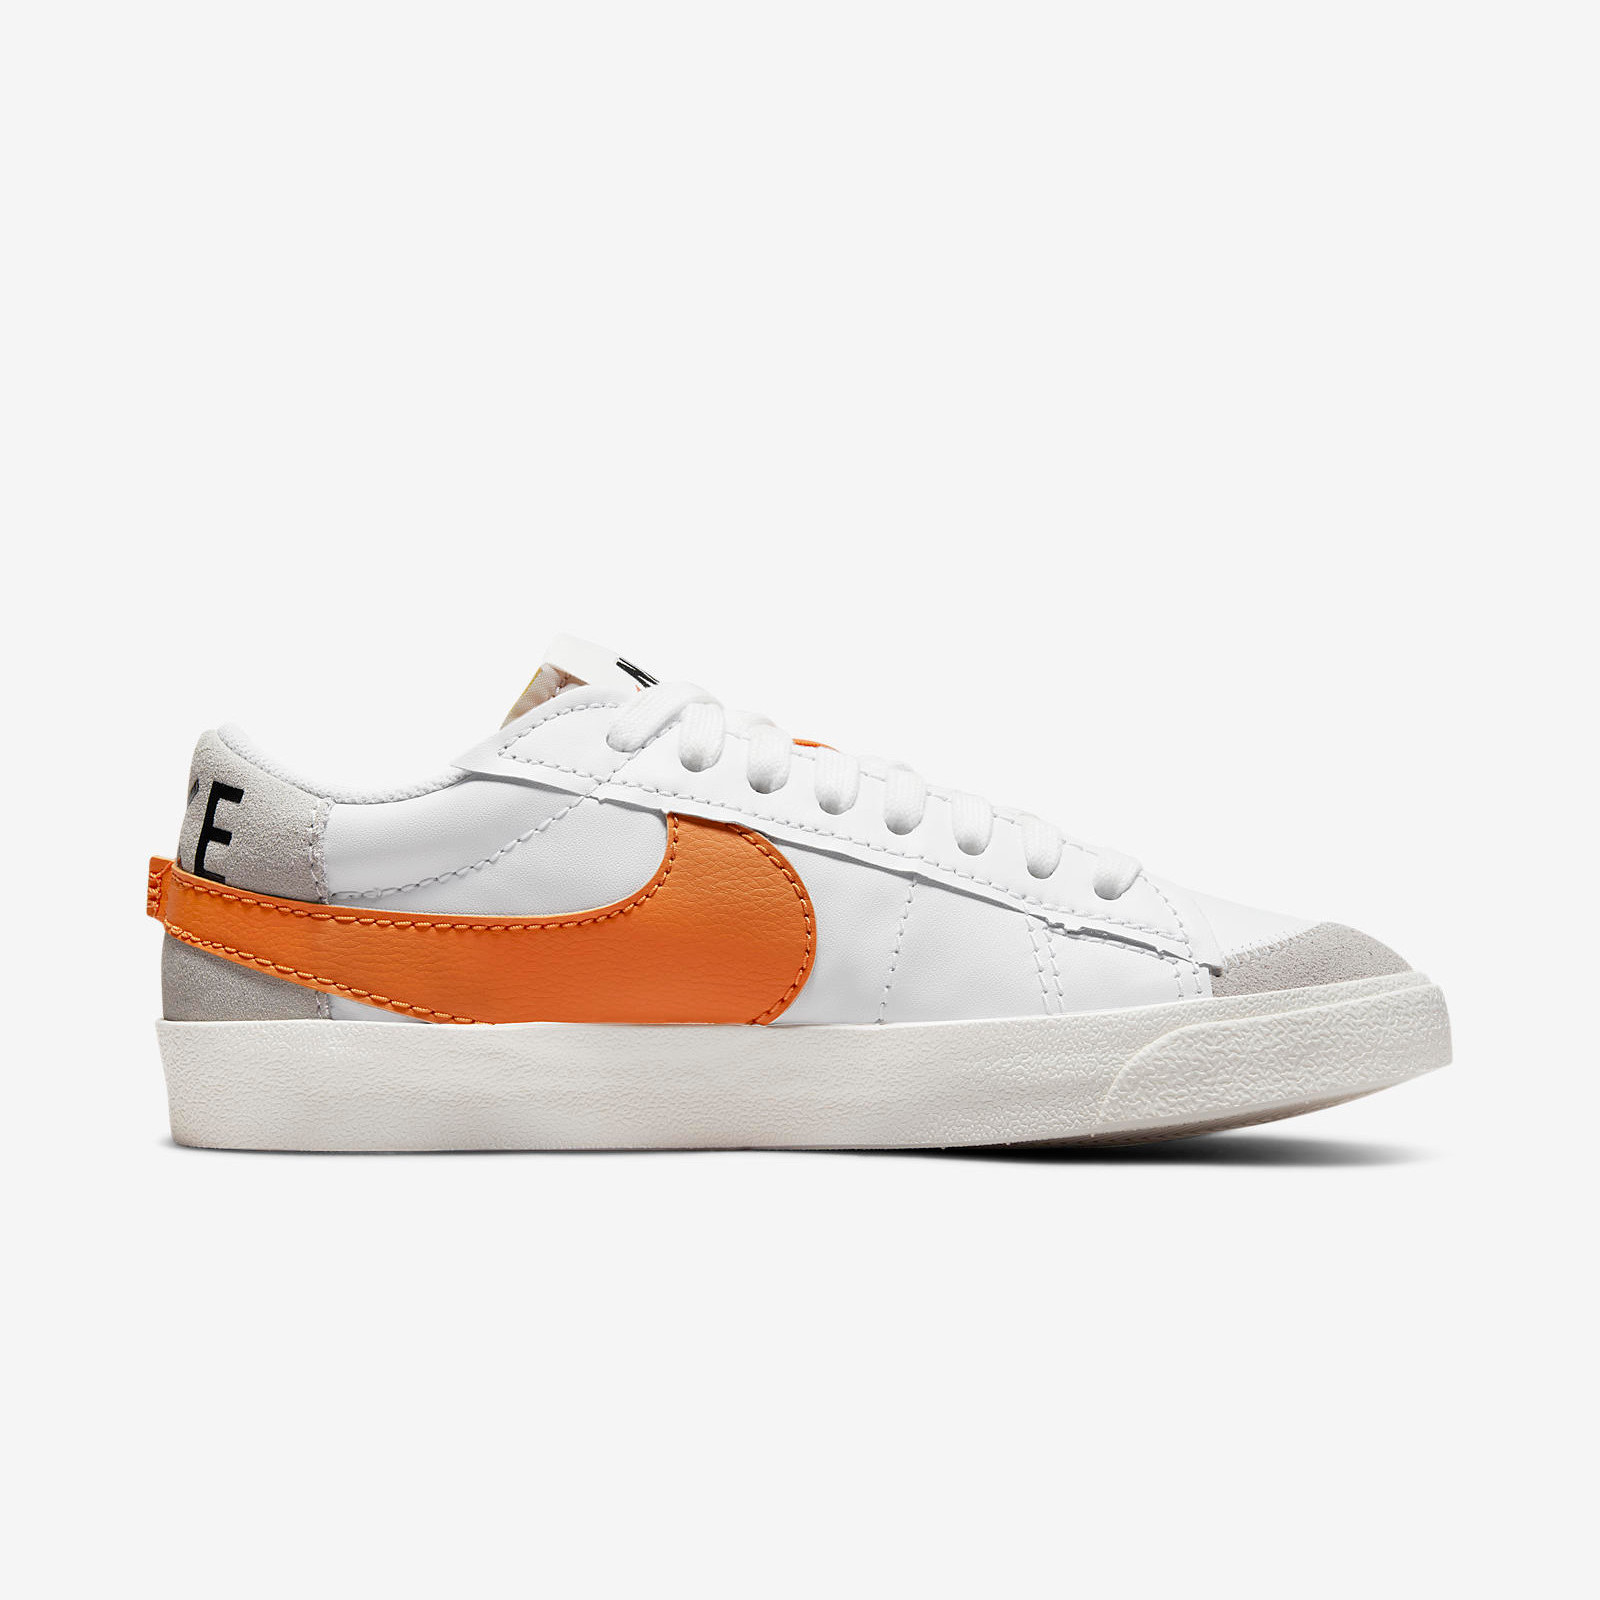 Nike Blazer Low Jumbo
Orange / White